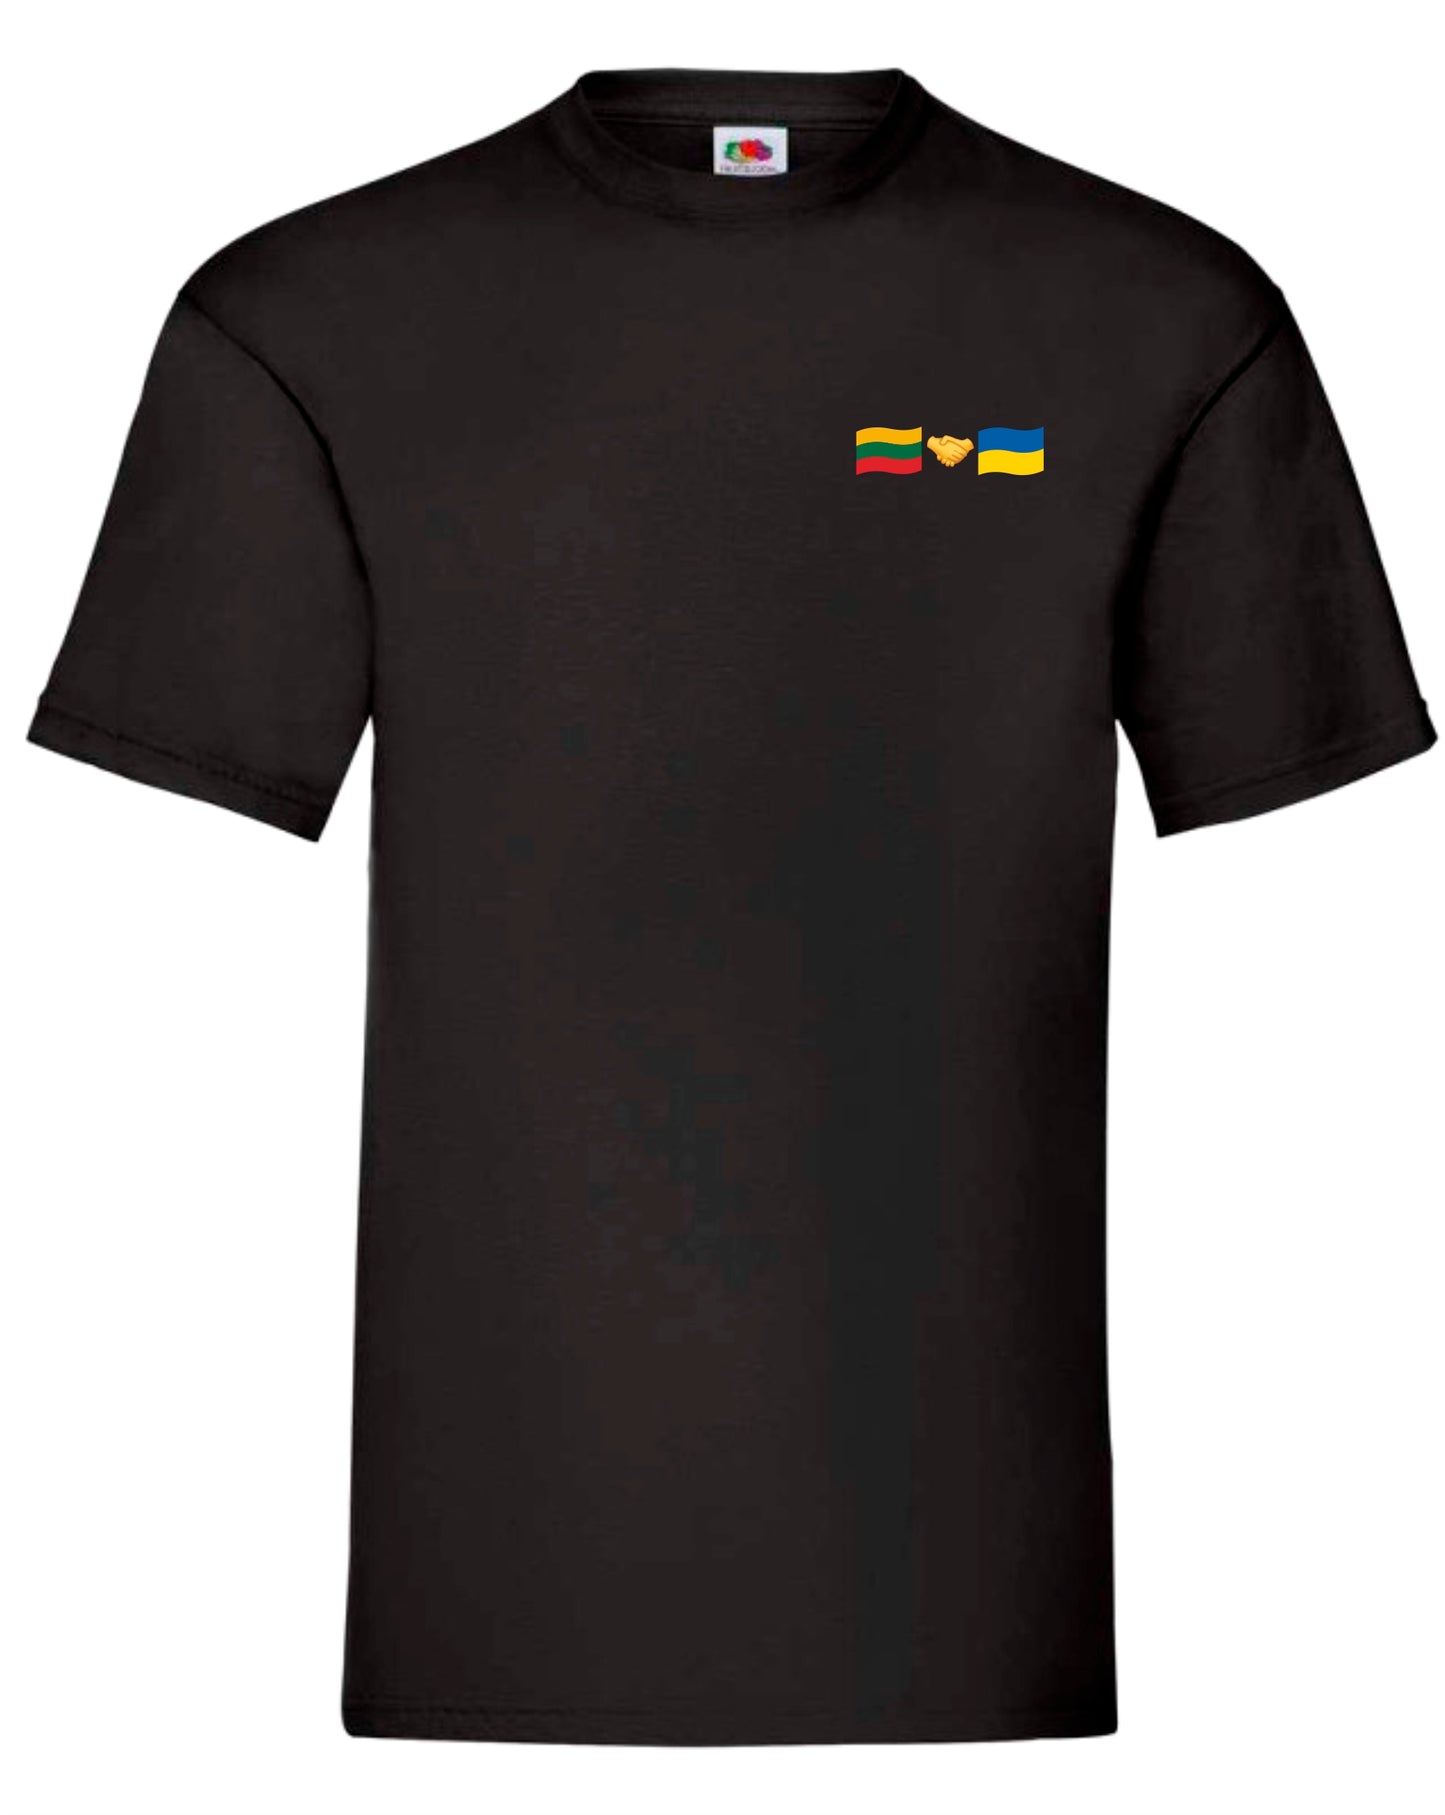 T-shirt Lithuania + Ukraine (small logo)